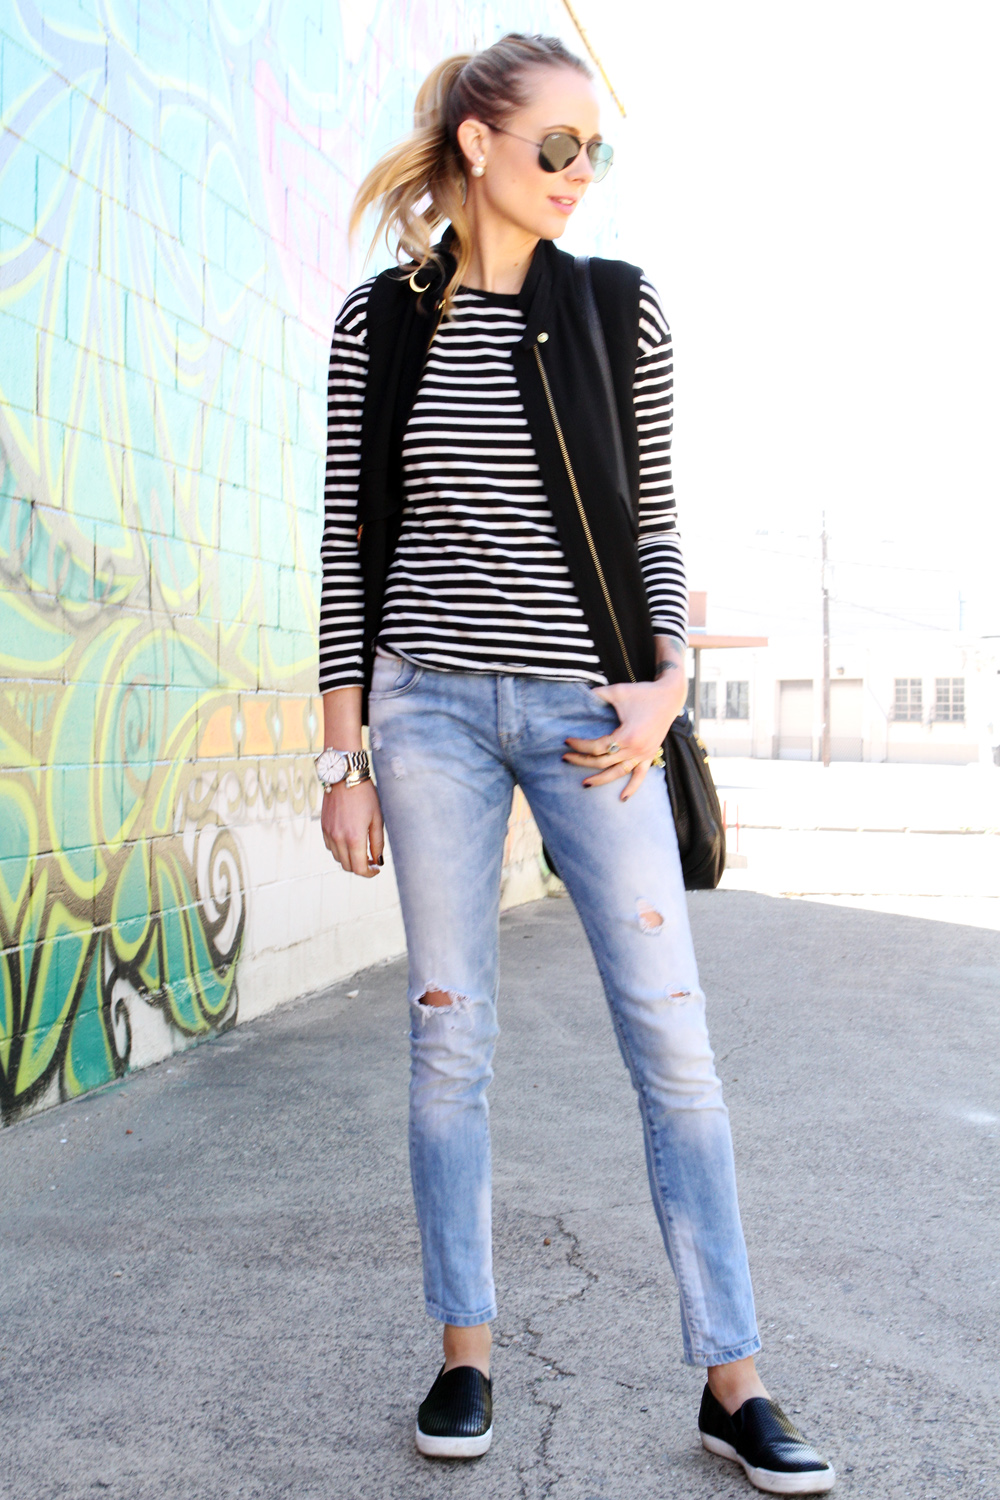 elycia black vest, black & white stripe shirt, ripped denim jeans, black sneakers